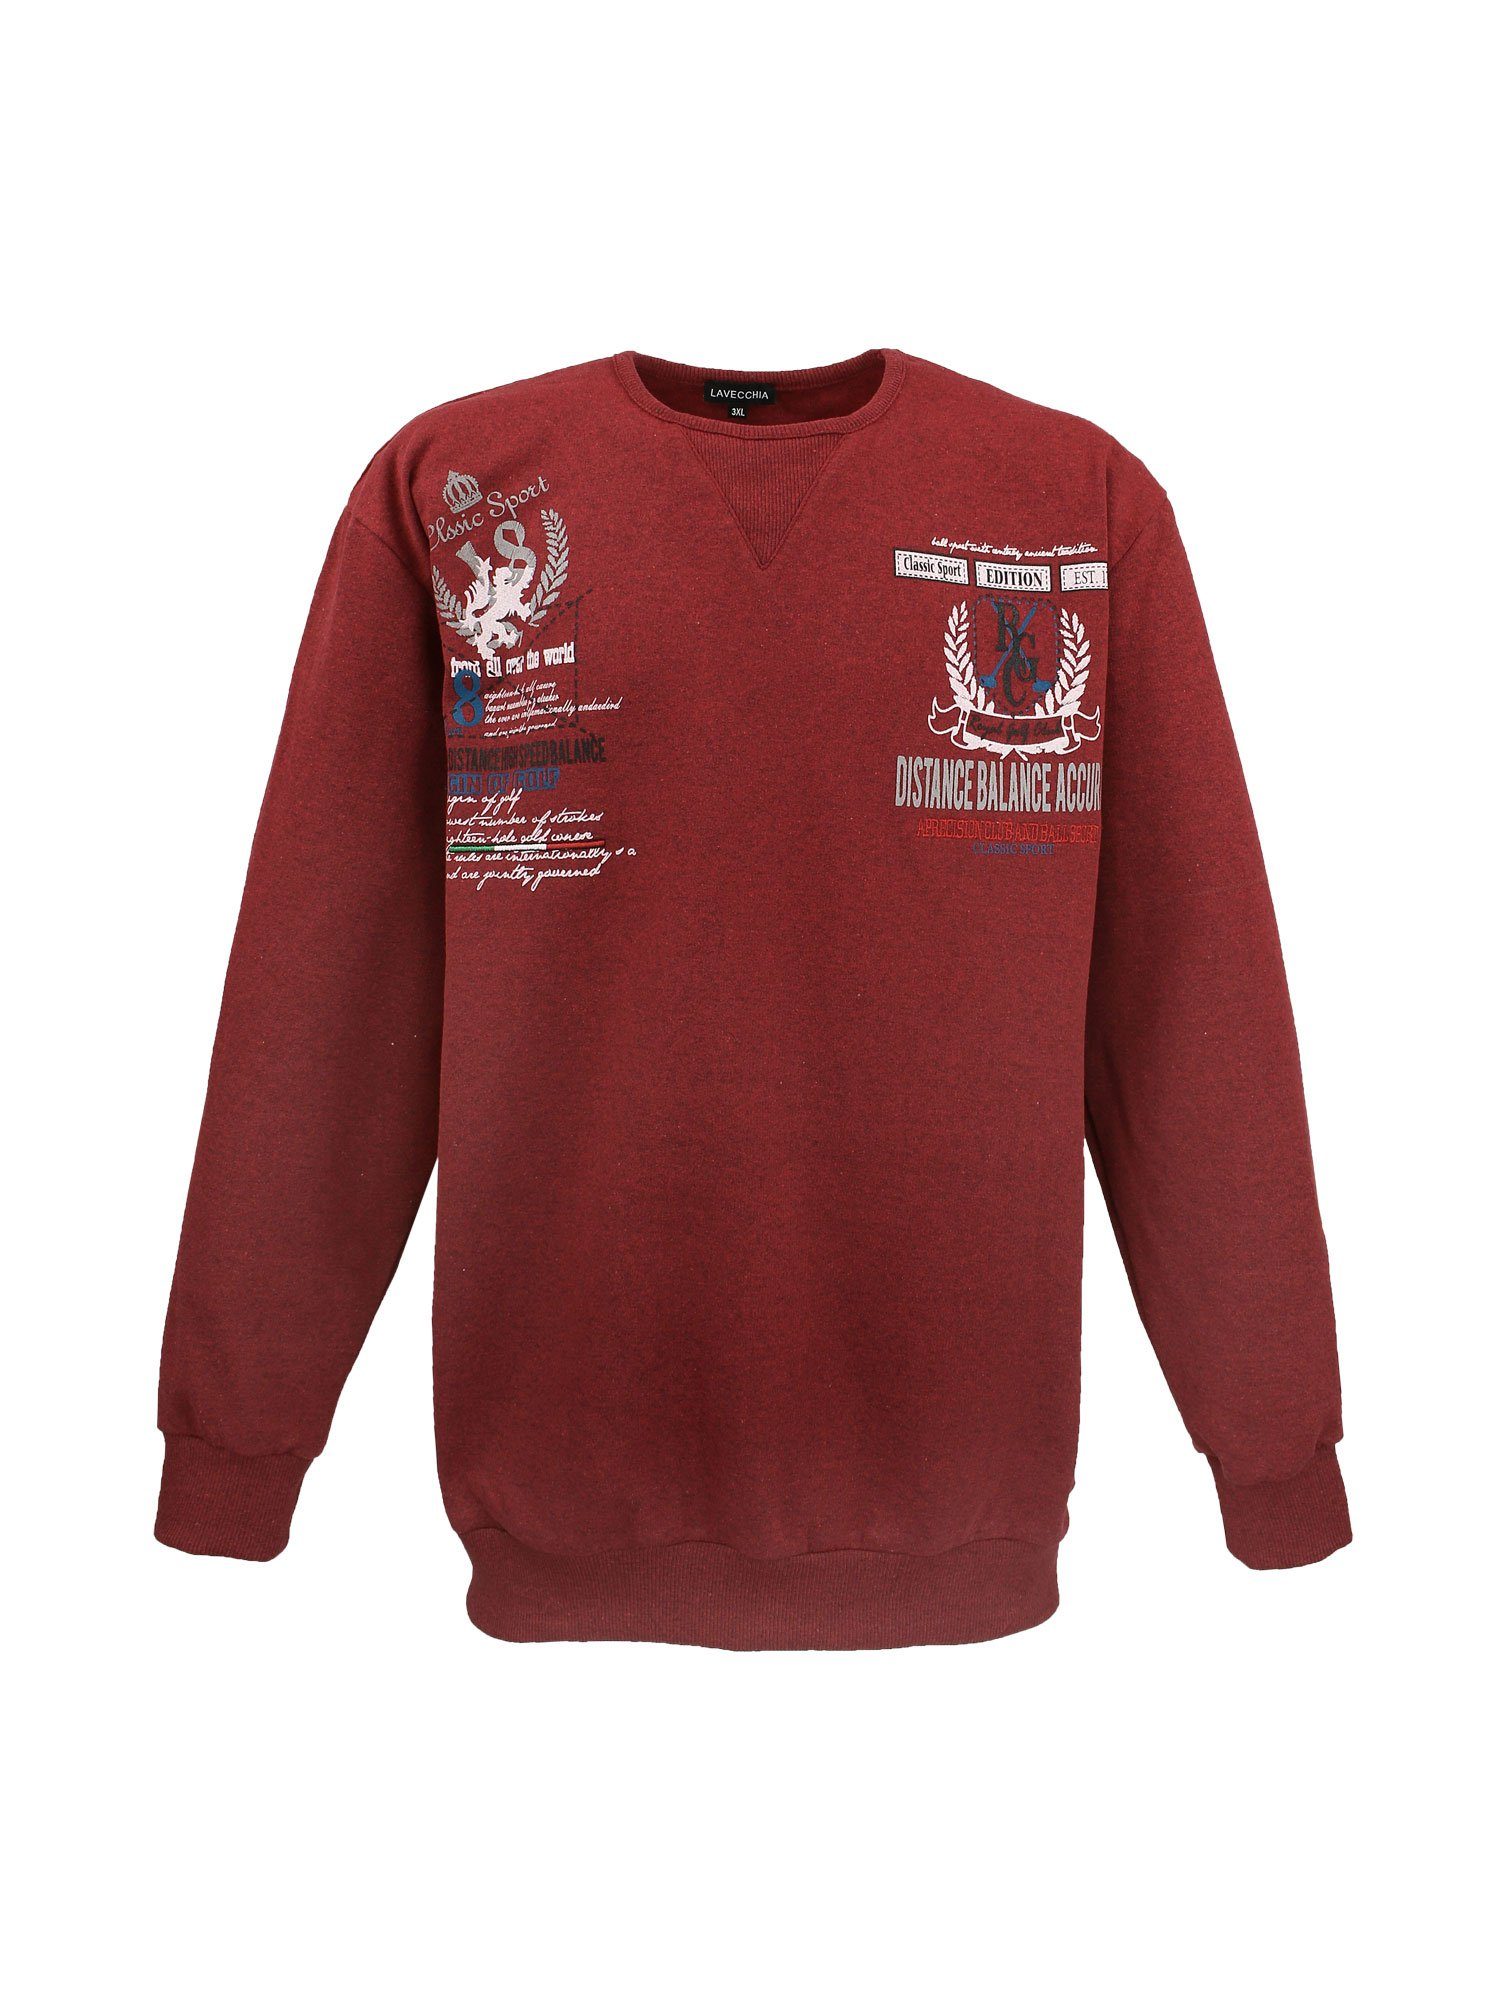 Lavecchia Sweatshirt Übergrößen Sweater LV-603 Sweat Pulli Pullover bordo-rot-meliert